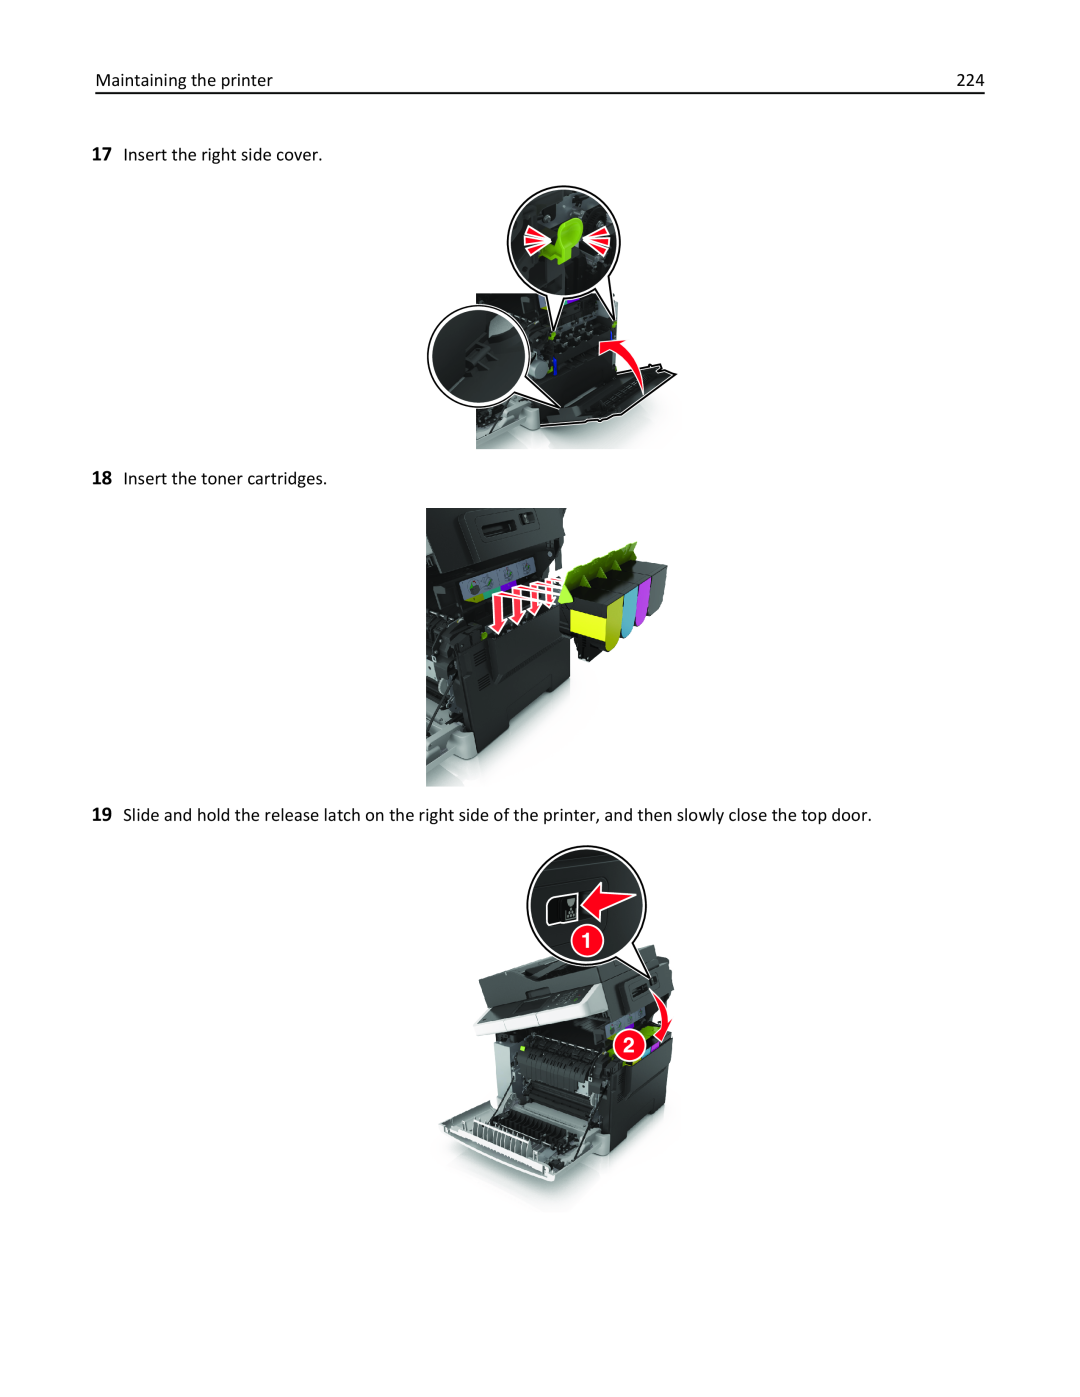 Lexmark 436 manual Maintaining the printer, Insert the right side cover 18 Insert the toner cartridges 